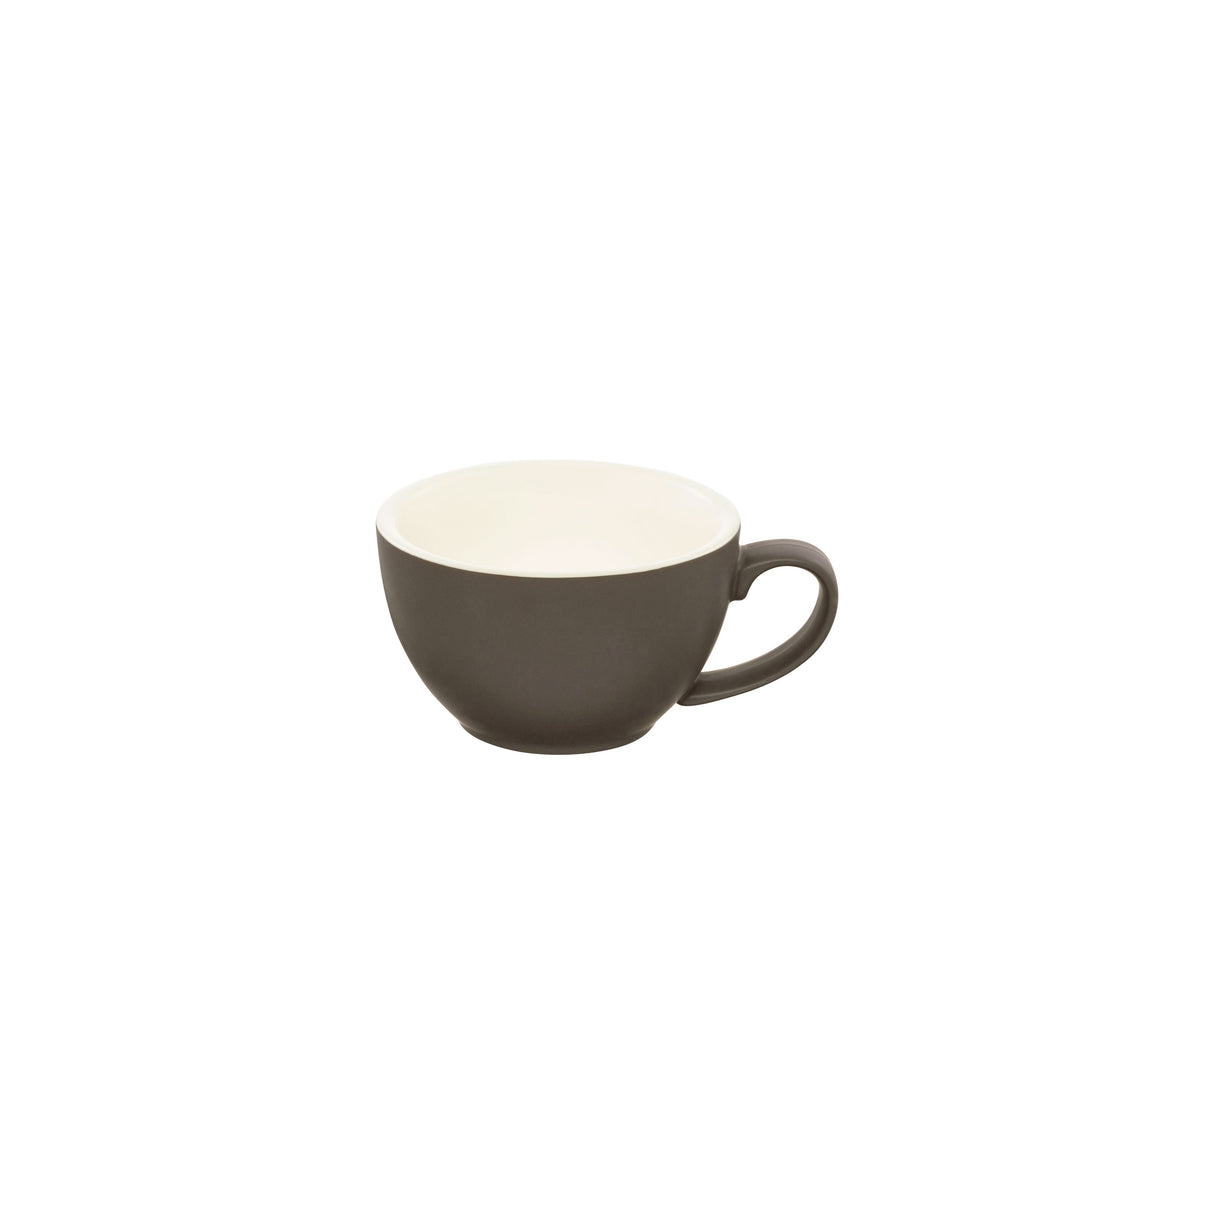 Megaccino cup - Slate, 280ml: Pack of 6